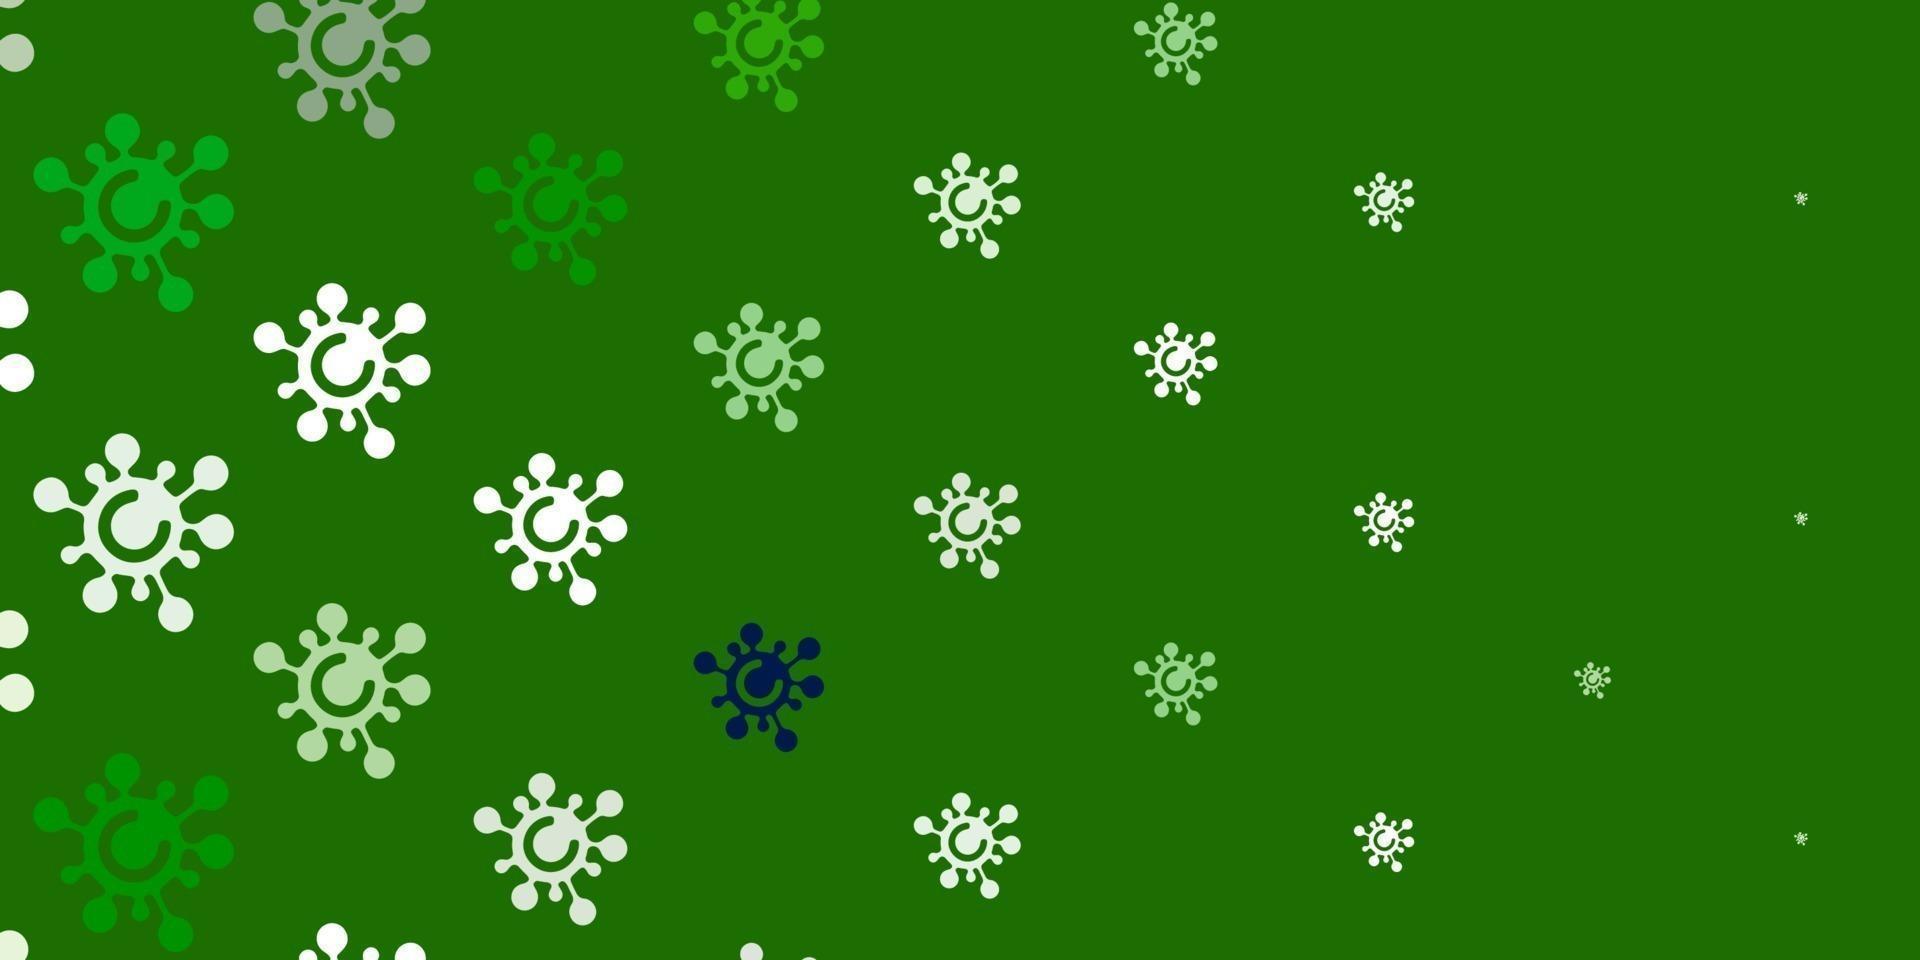 Light Green vector backdrop with virus symbols.